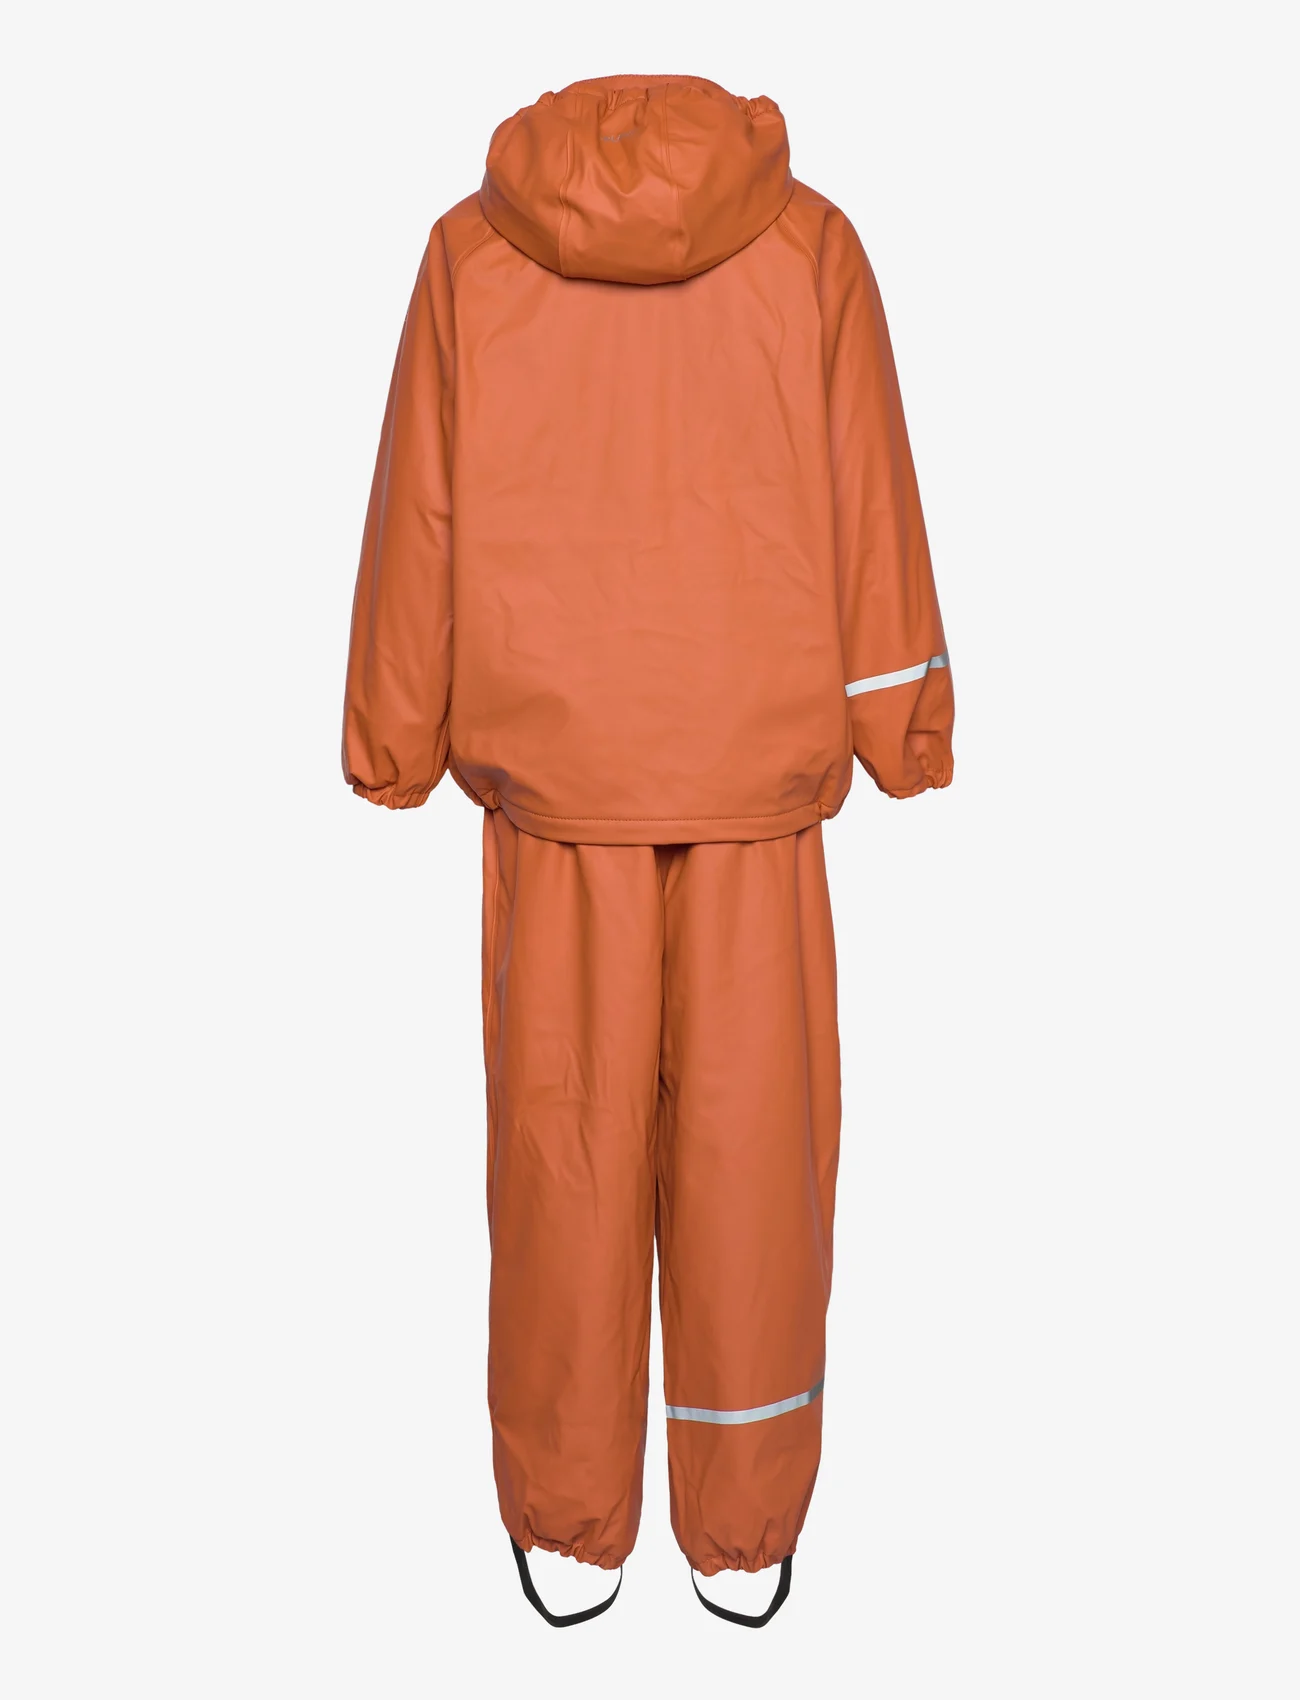 CeLaVi - Rainwear Set -Solid, w.fleece - Žieminiai kombinezonai - amber brown - 1